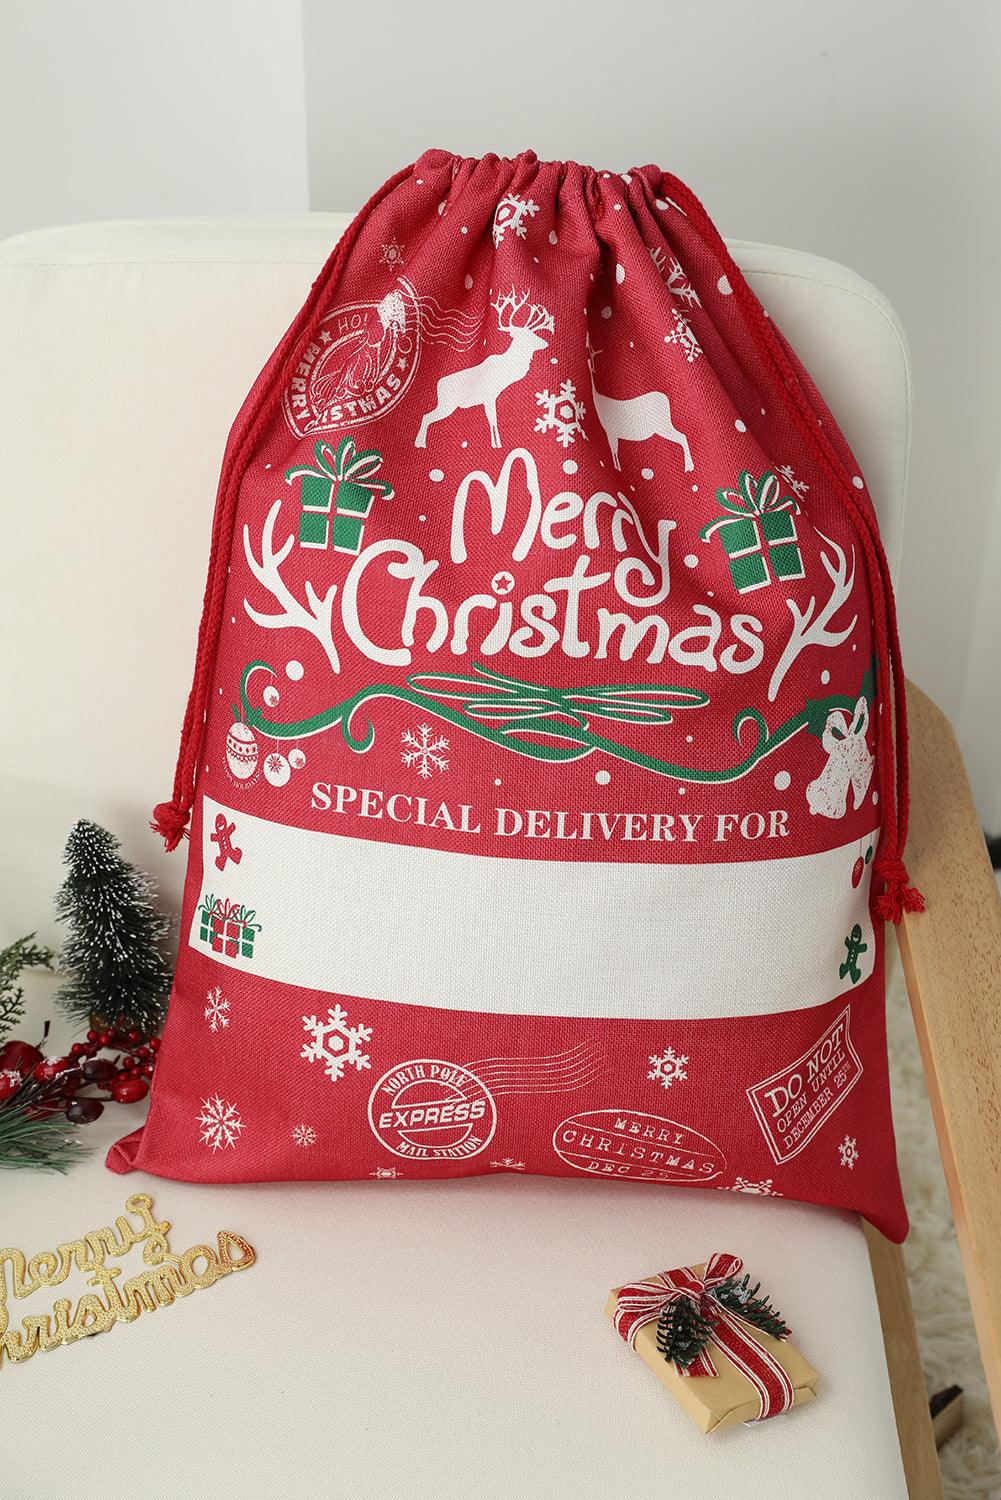 Christmas Drawstring Large Gift Bag 50*66cm - L & M Kee, LLC